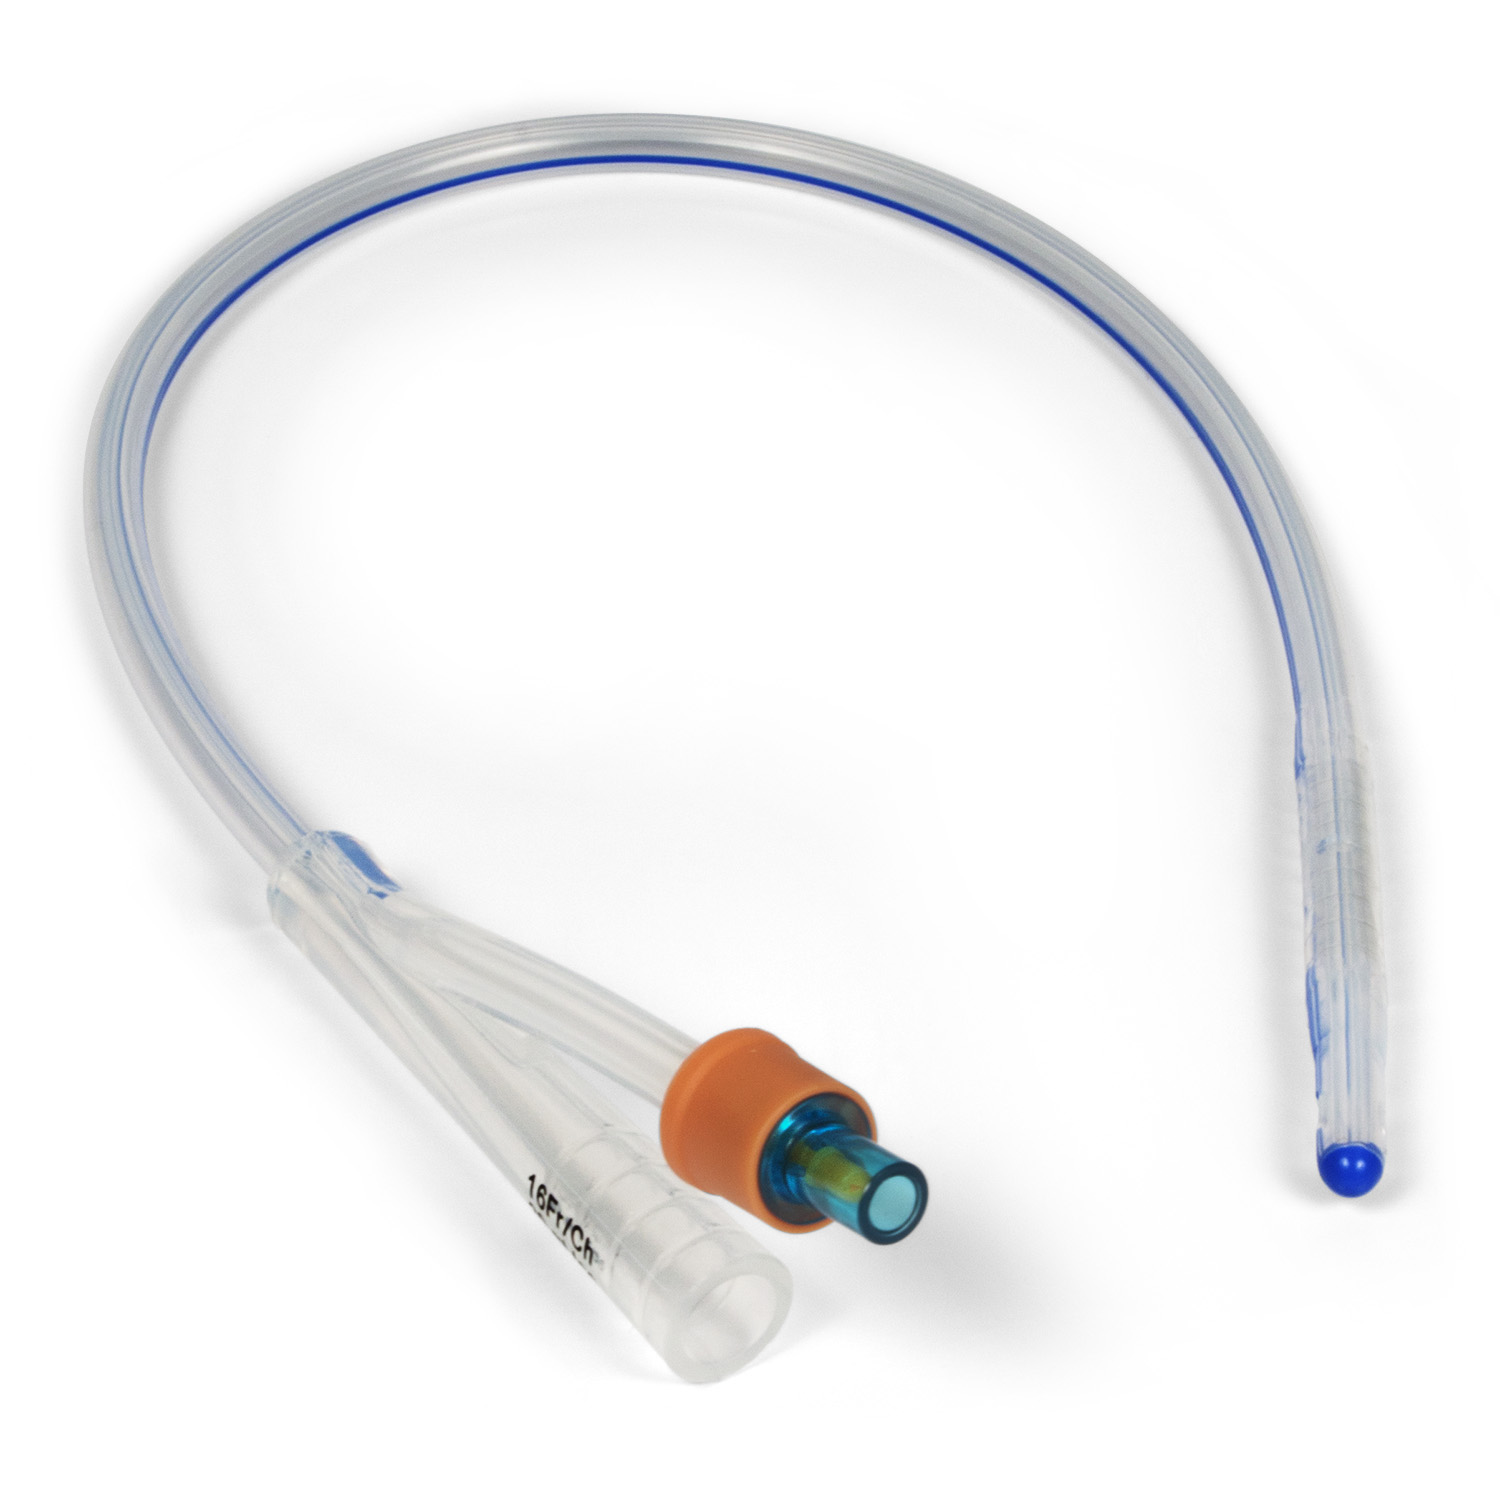 Silicone Foley Catheters 2-way Standard - 20FR / 5-10cc